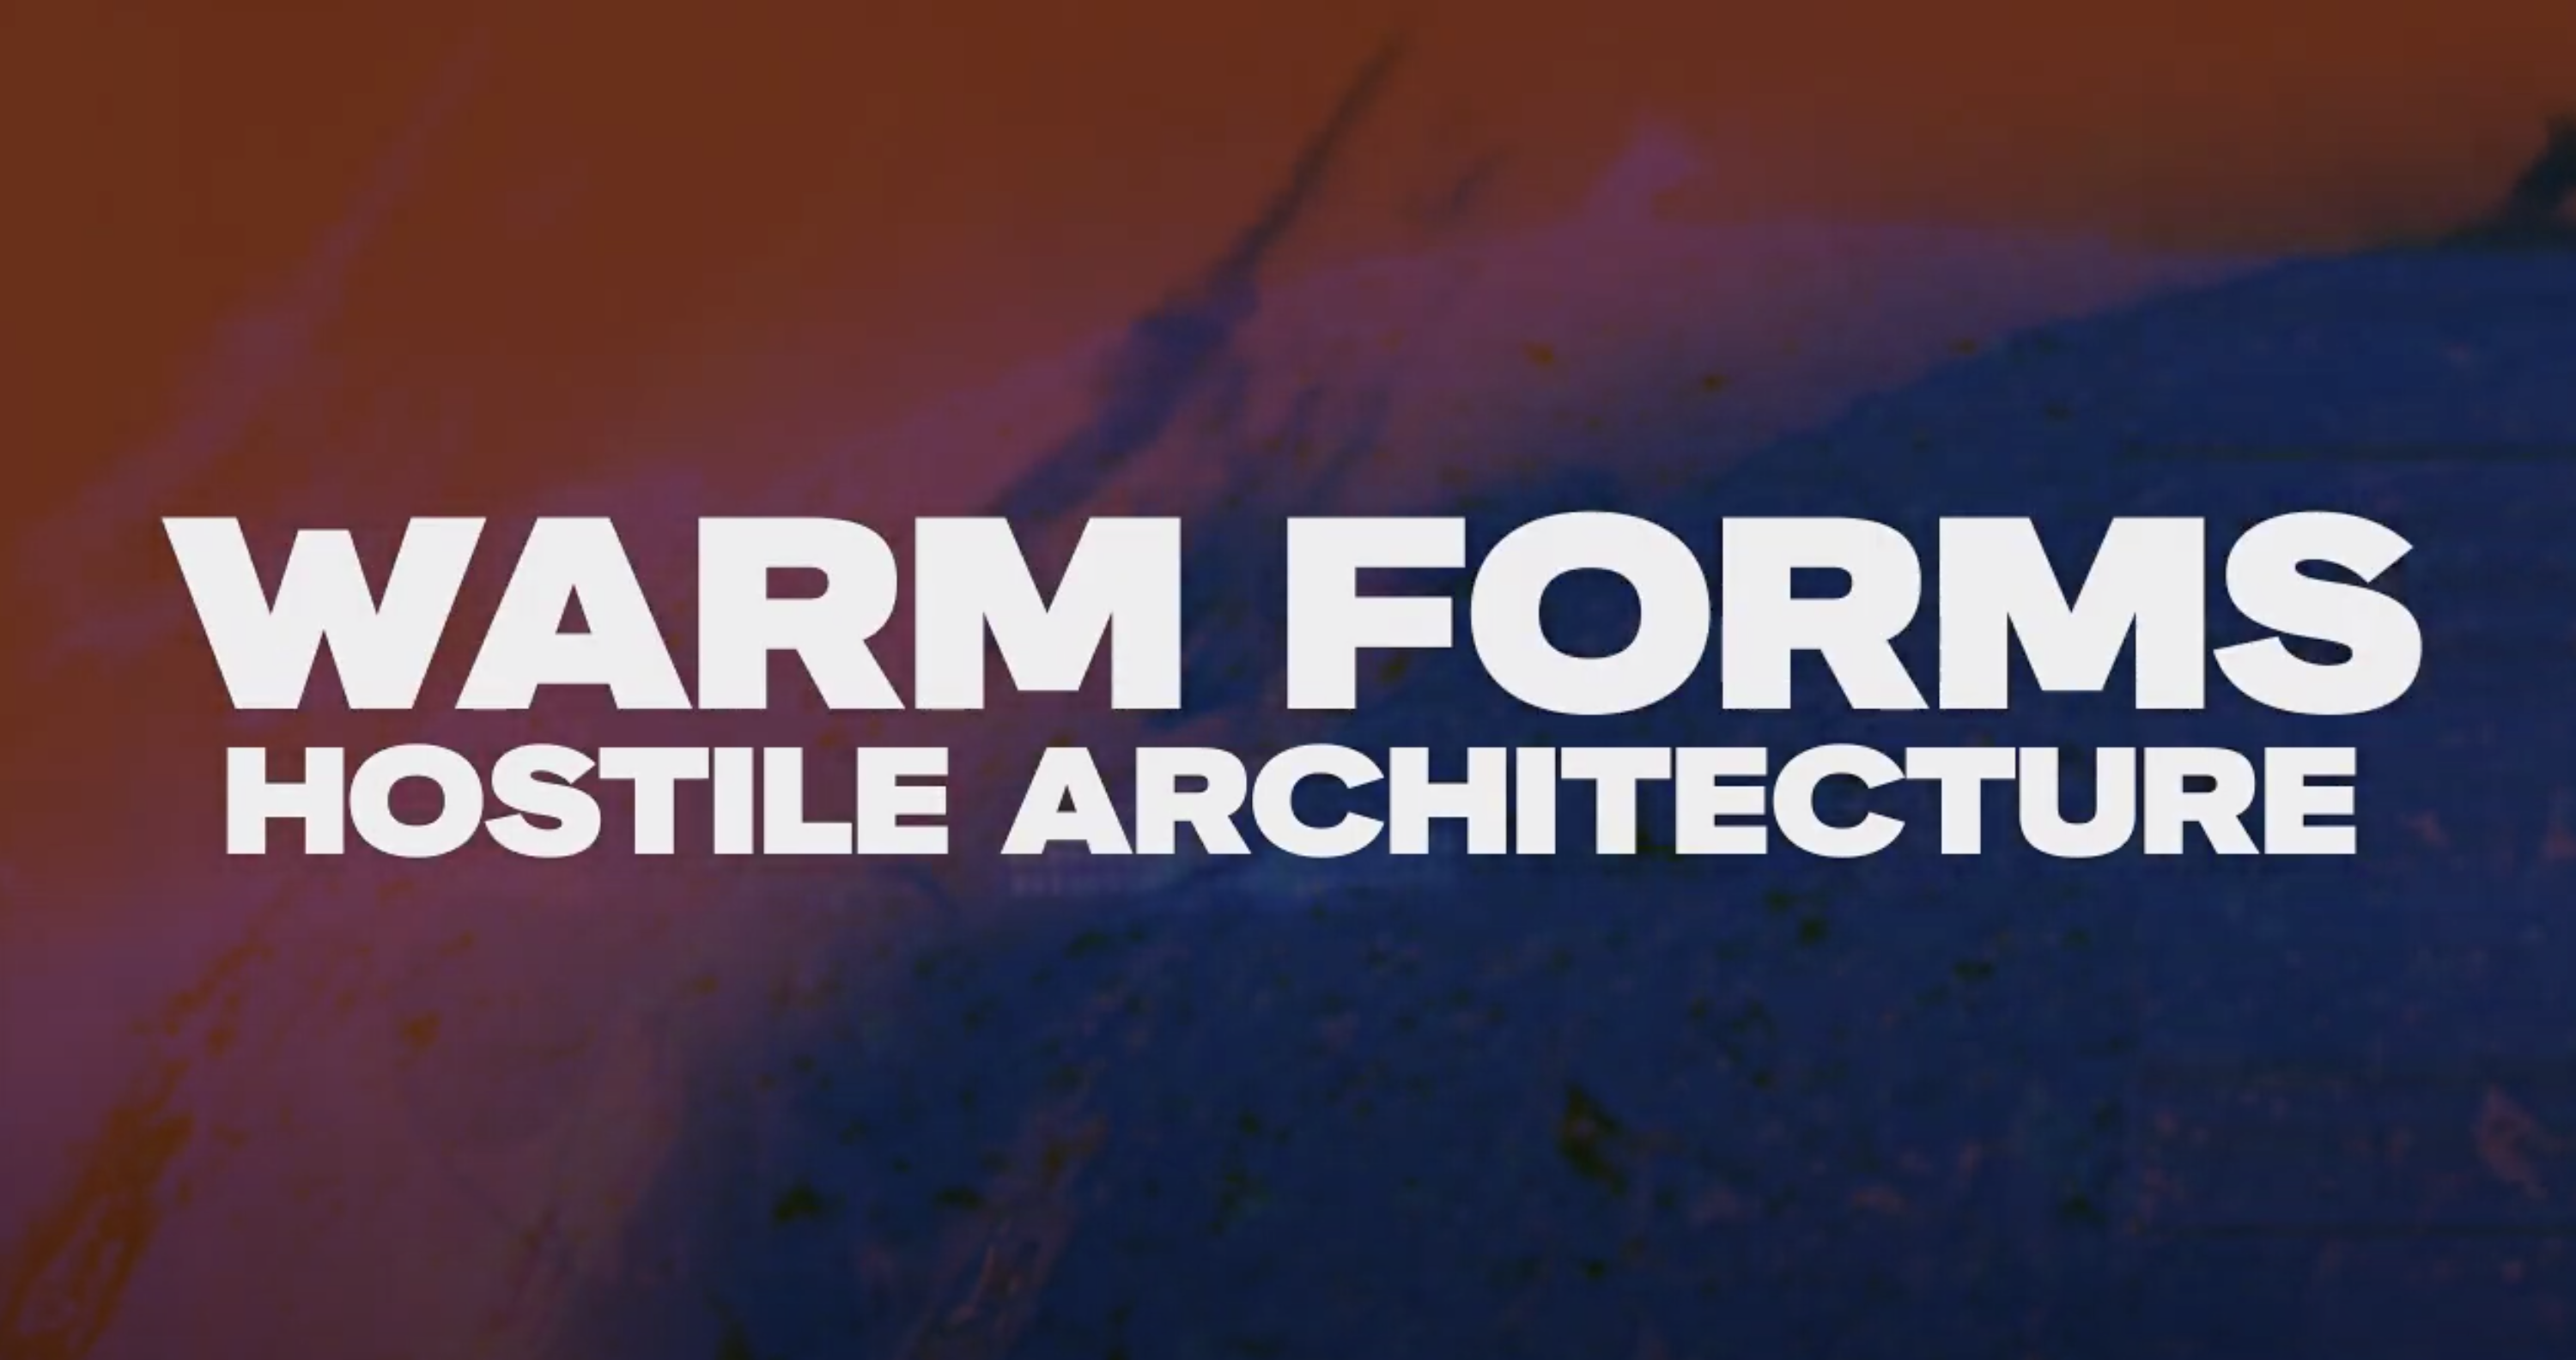 Warm Forms - Hostile Architecture